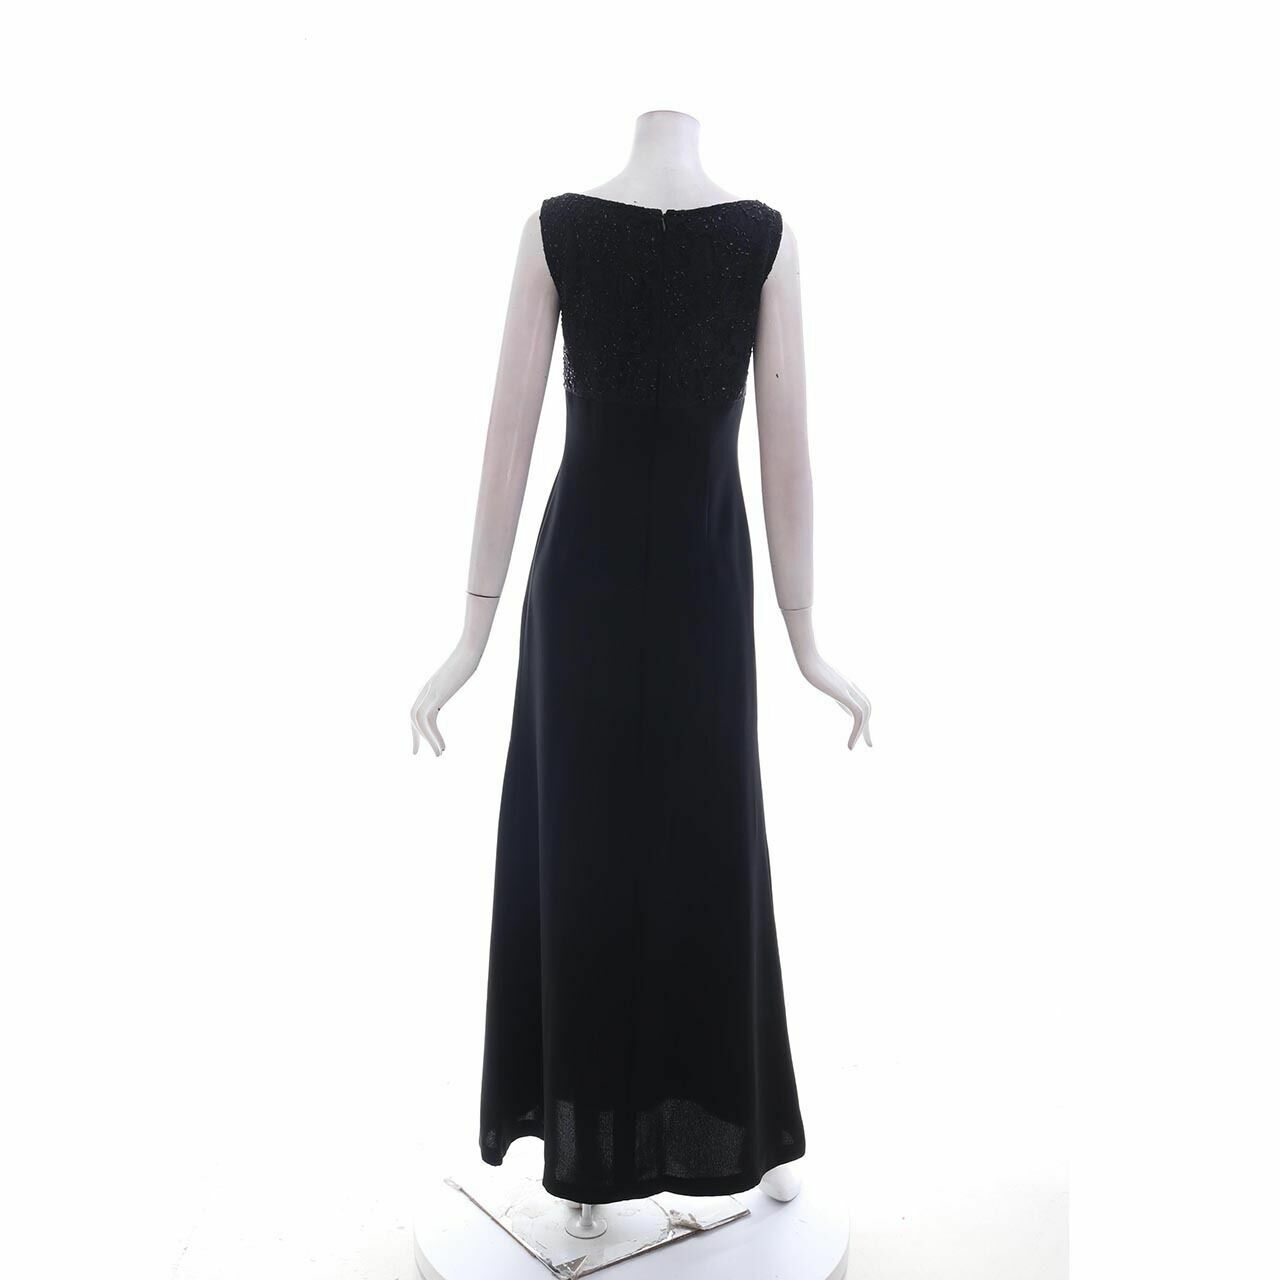 VOTUM By Sebastian & Cristina Black Long Dress